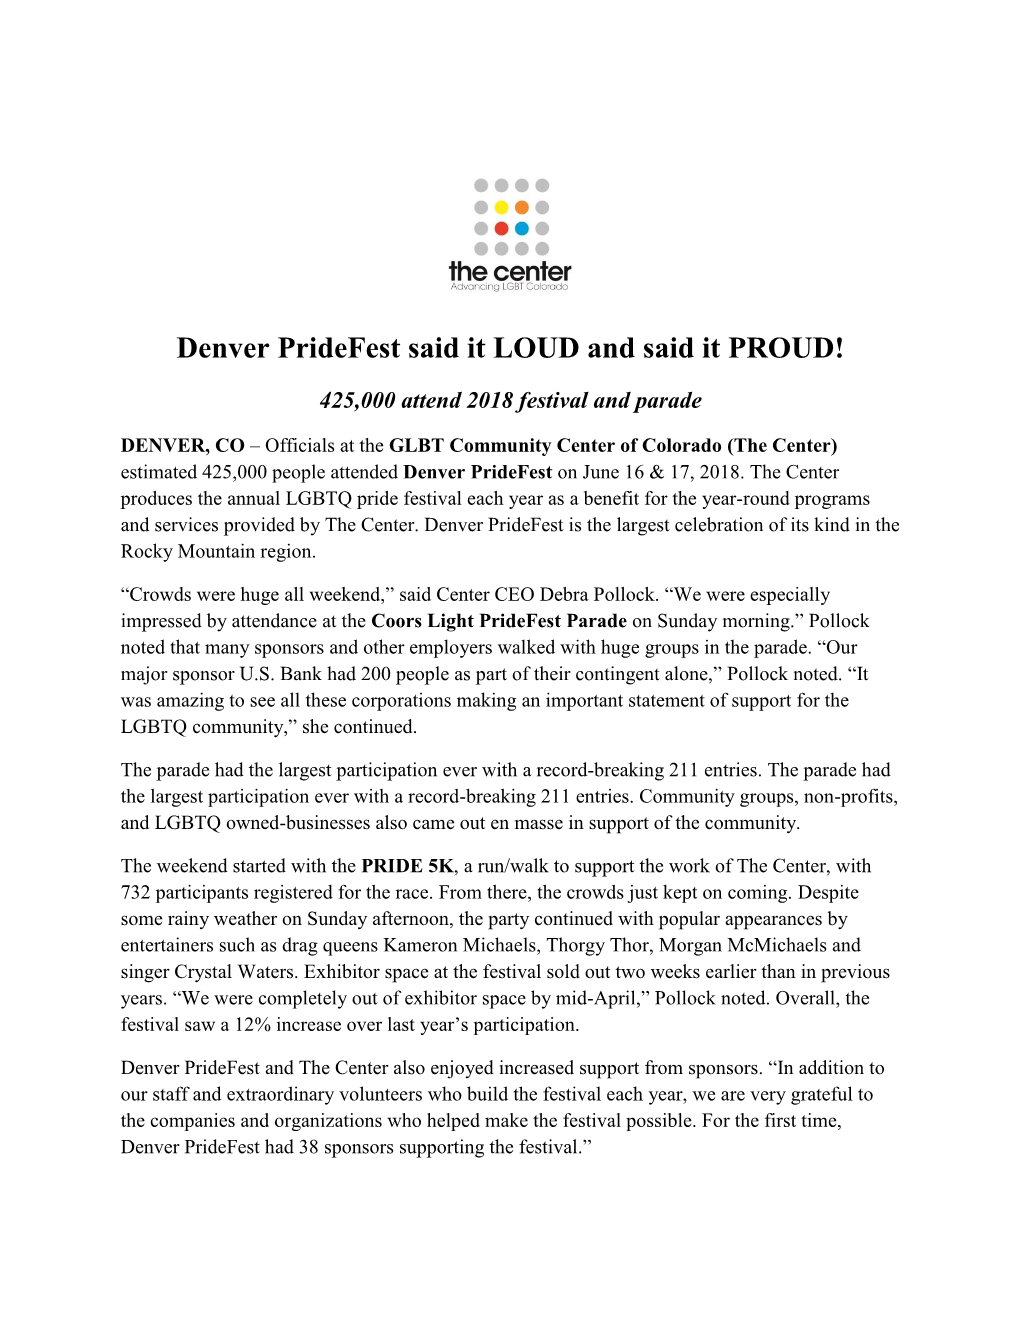 Denver Pridefest Said It LOUD and Said It PROUD!